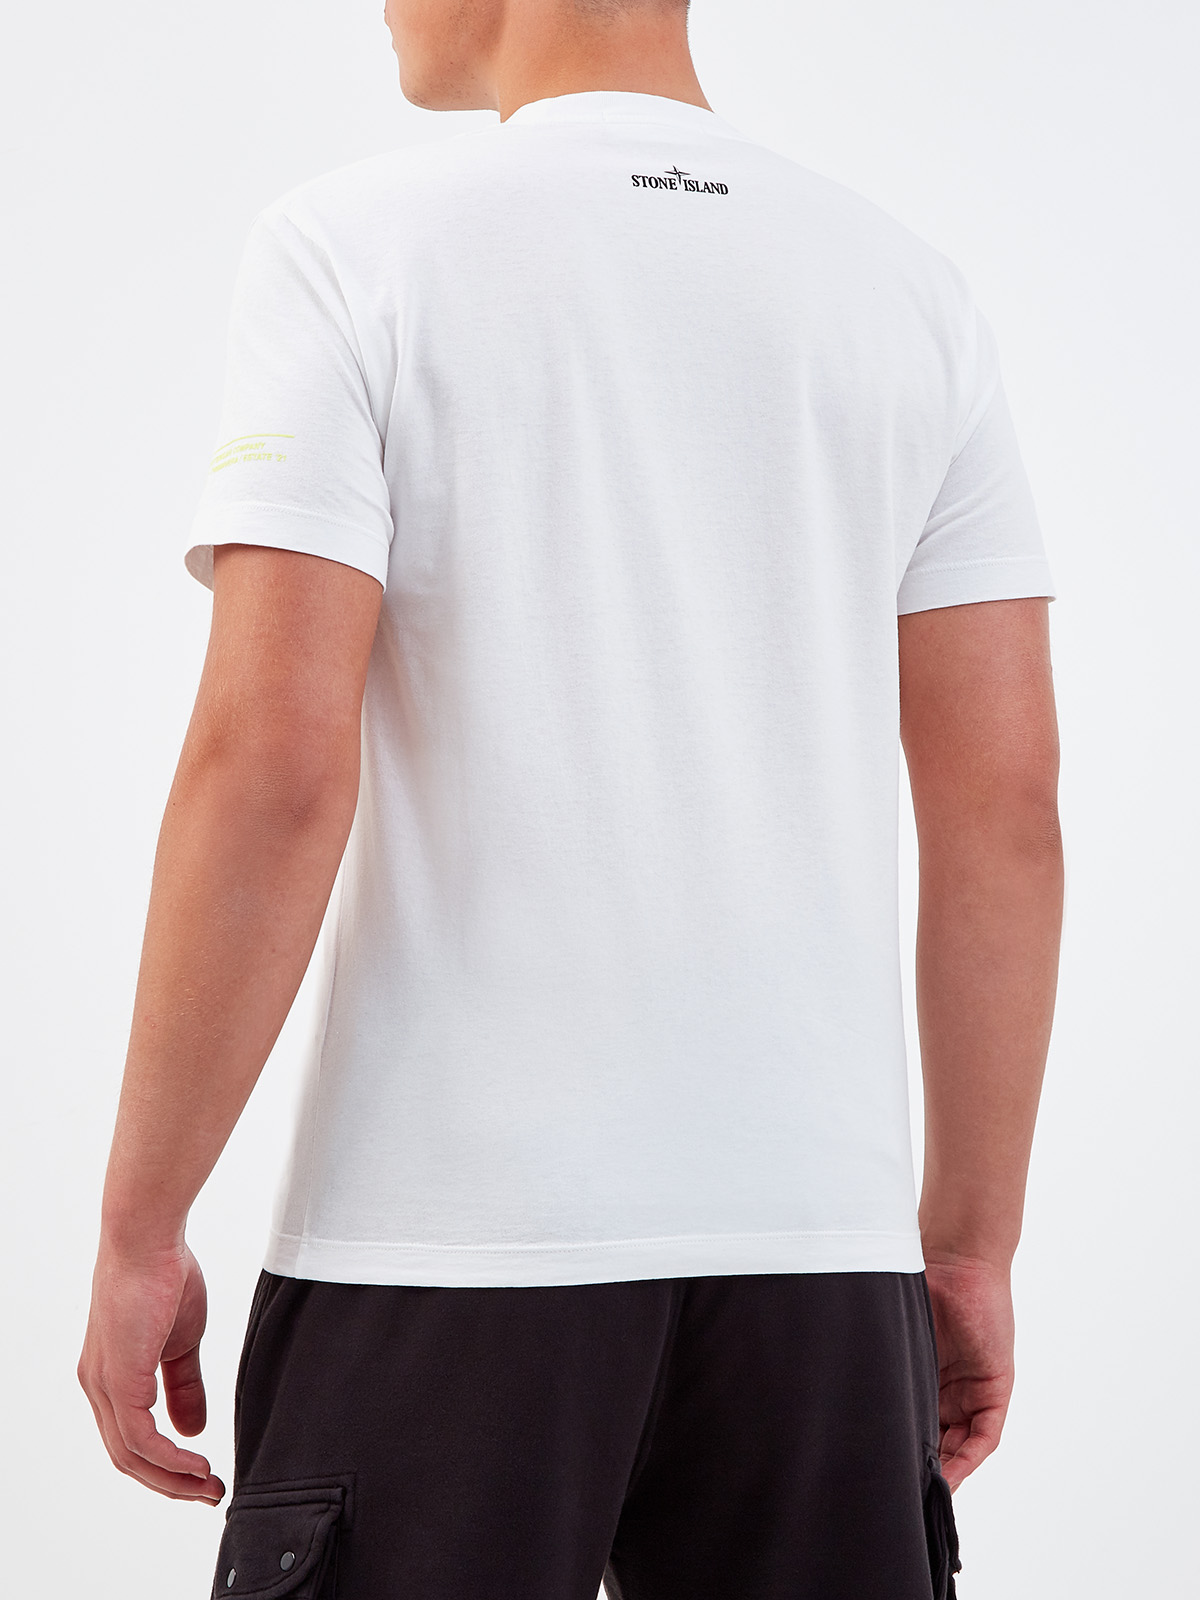 Белая футболка из джерси с яркой аппликацией STONE ISLAND, цвет белый, размер S;M;L;XL;2XL;3XL - фото 4